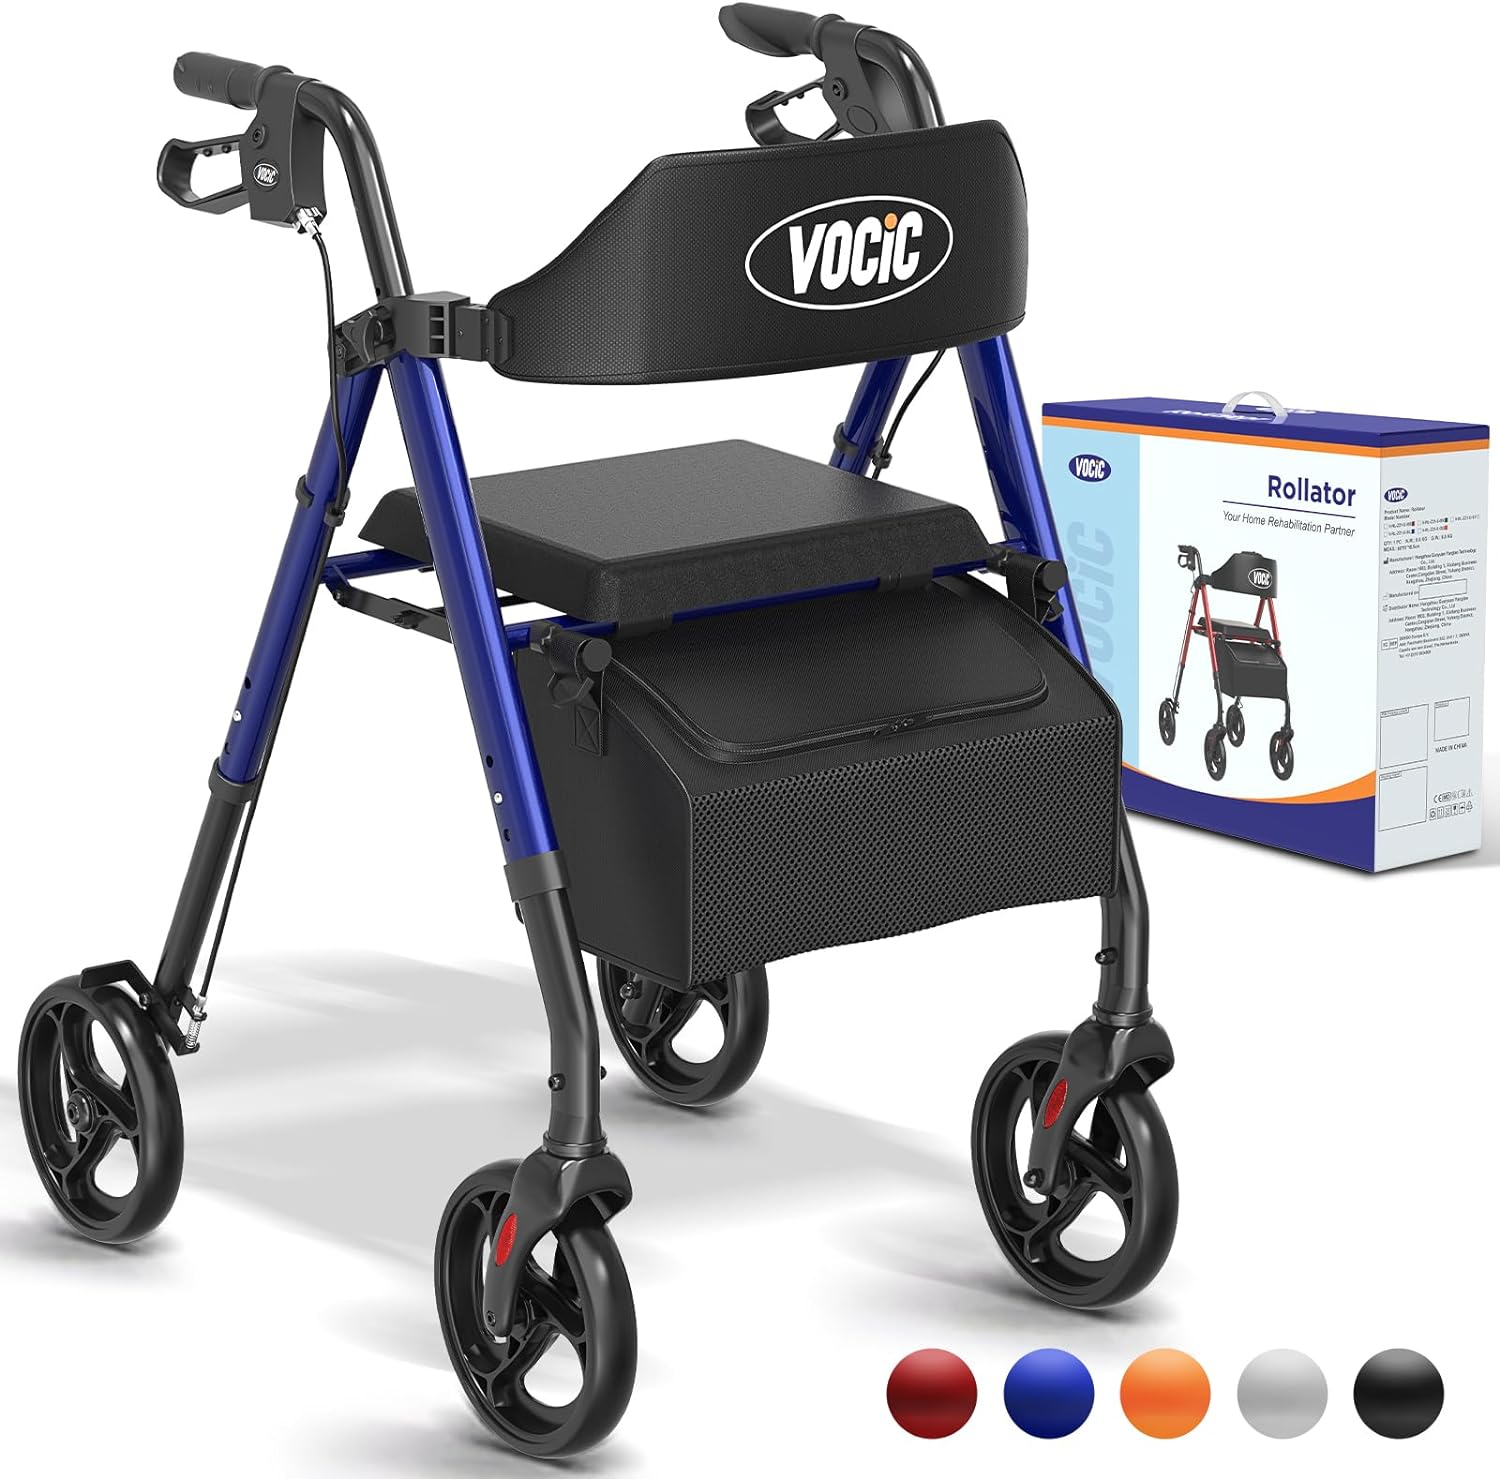 Mateside Z21 manual walker for rehabilitation and elderly care use